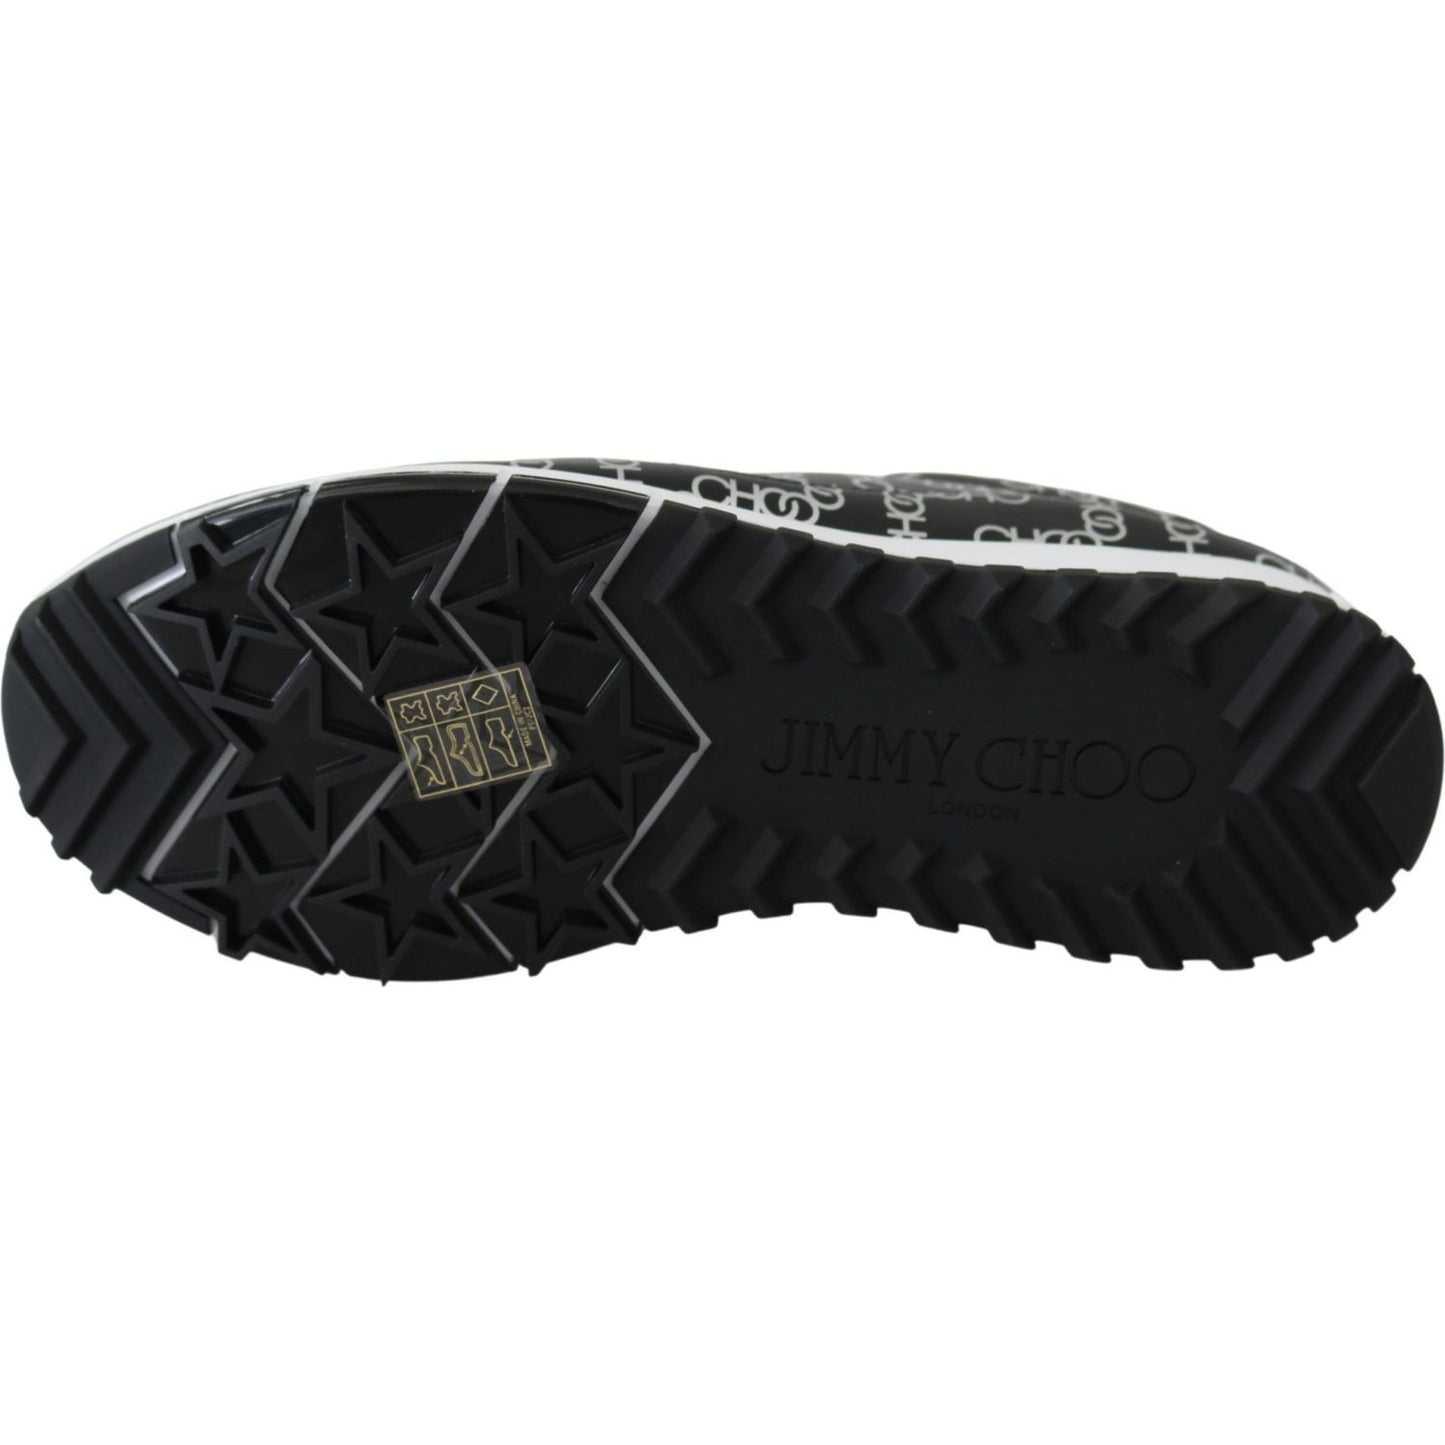 Jimmy ChooElegant Black & Silver Leather SneakersMcRichard Designer Brands£419.00